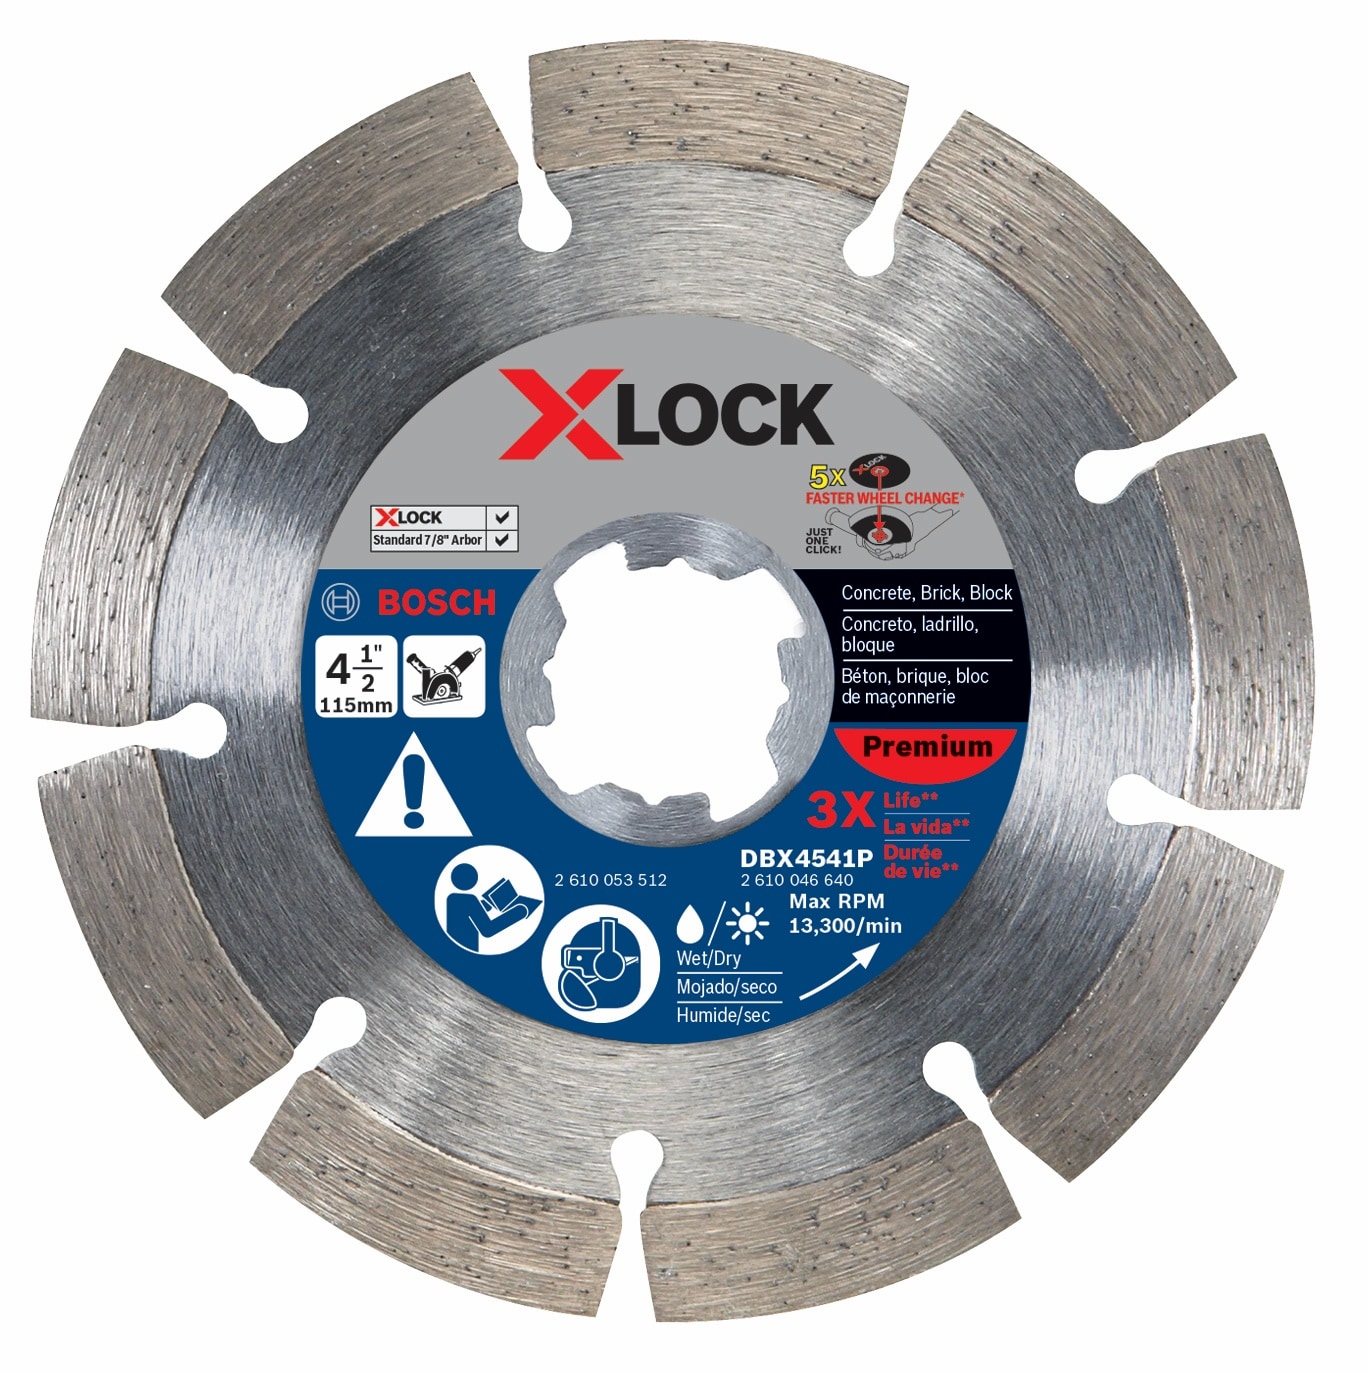 Bosch X-Lock 4.5-in Diamond Cutting/Grinding Wheel in the 